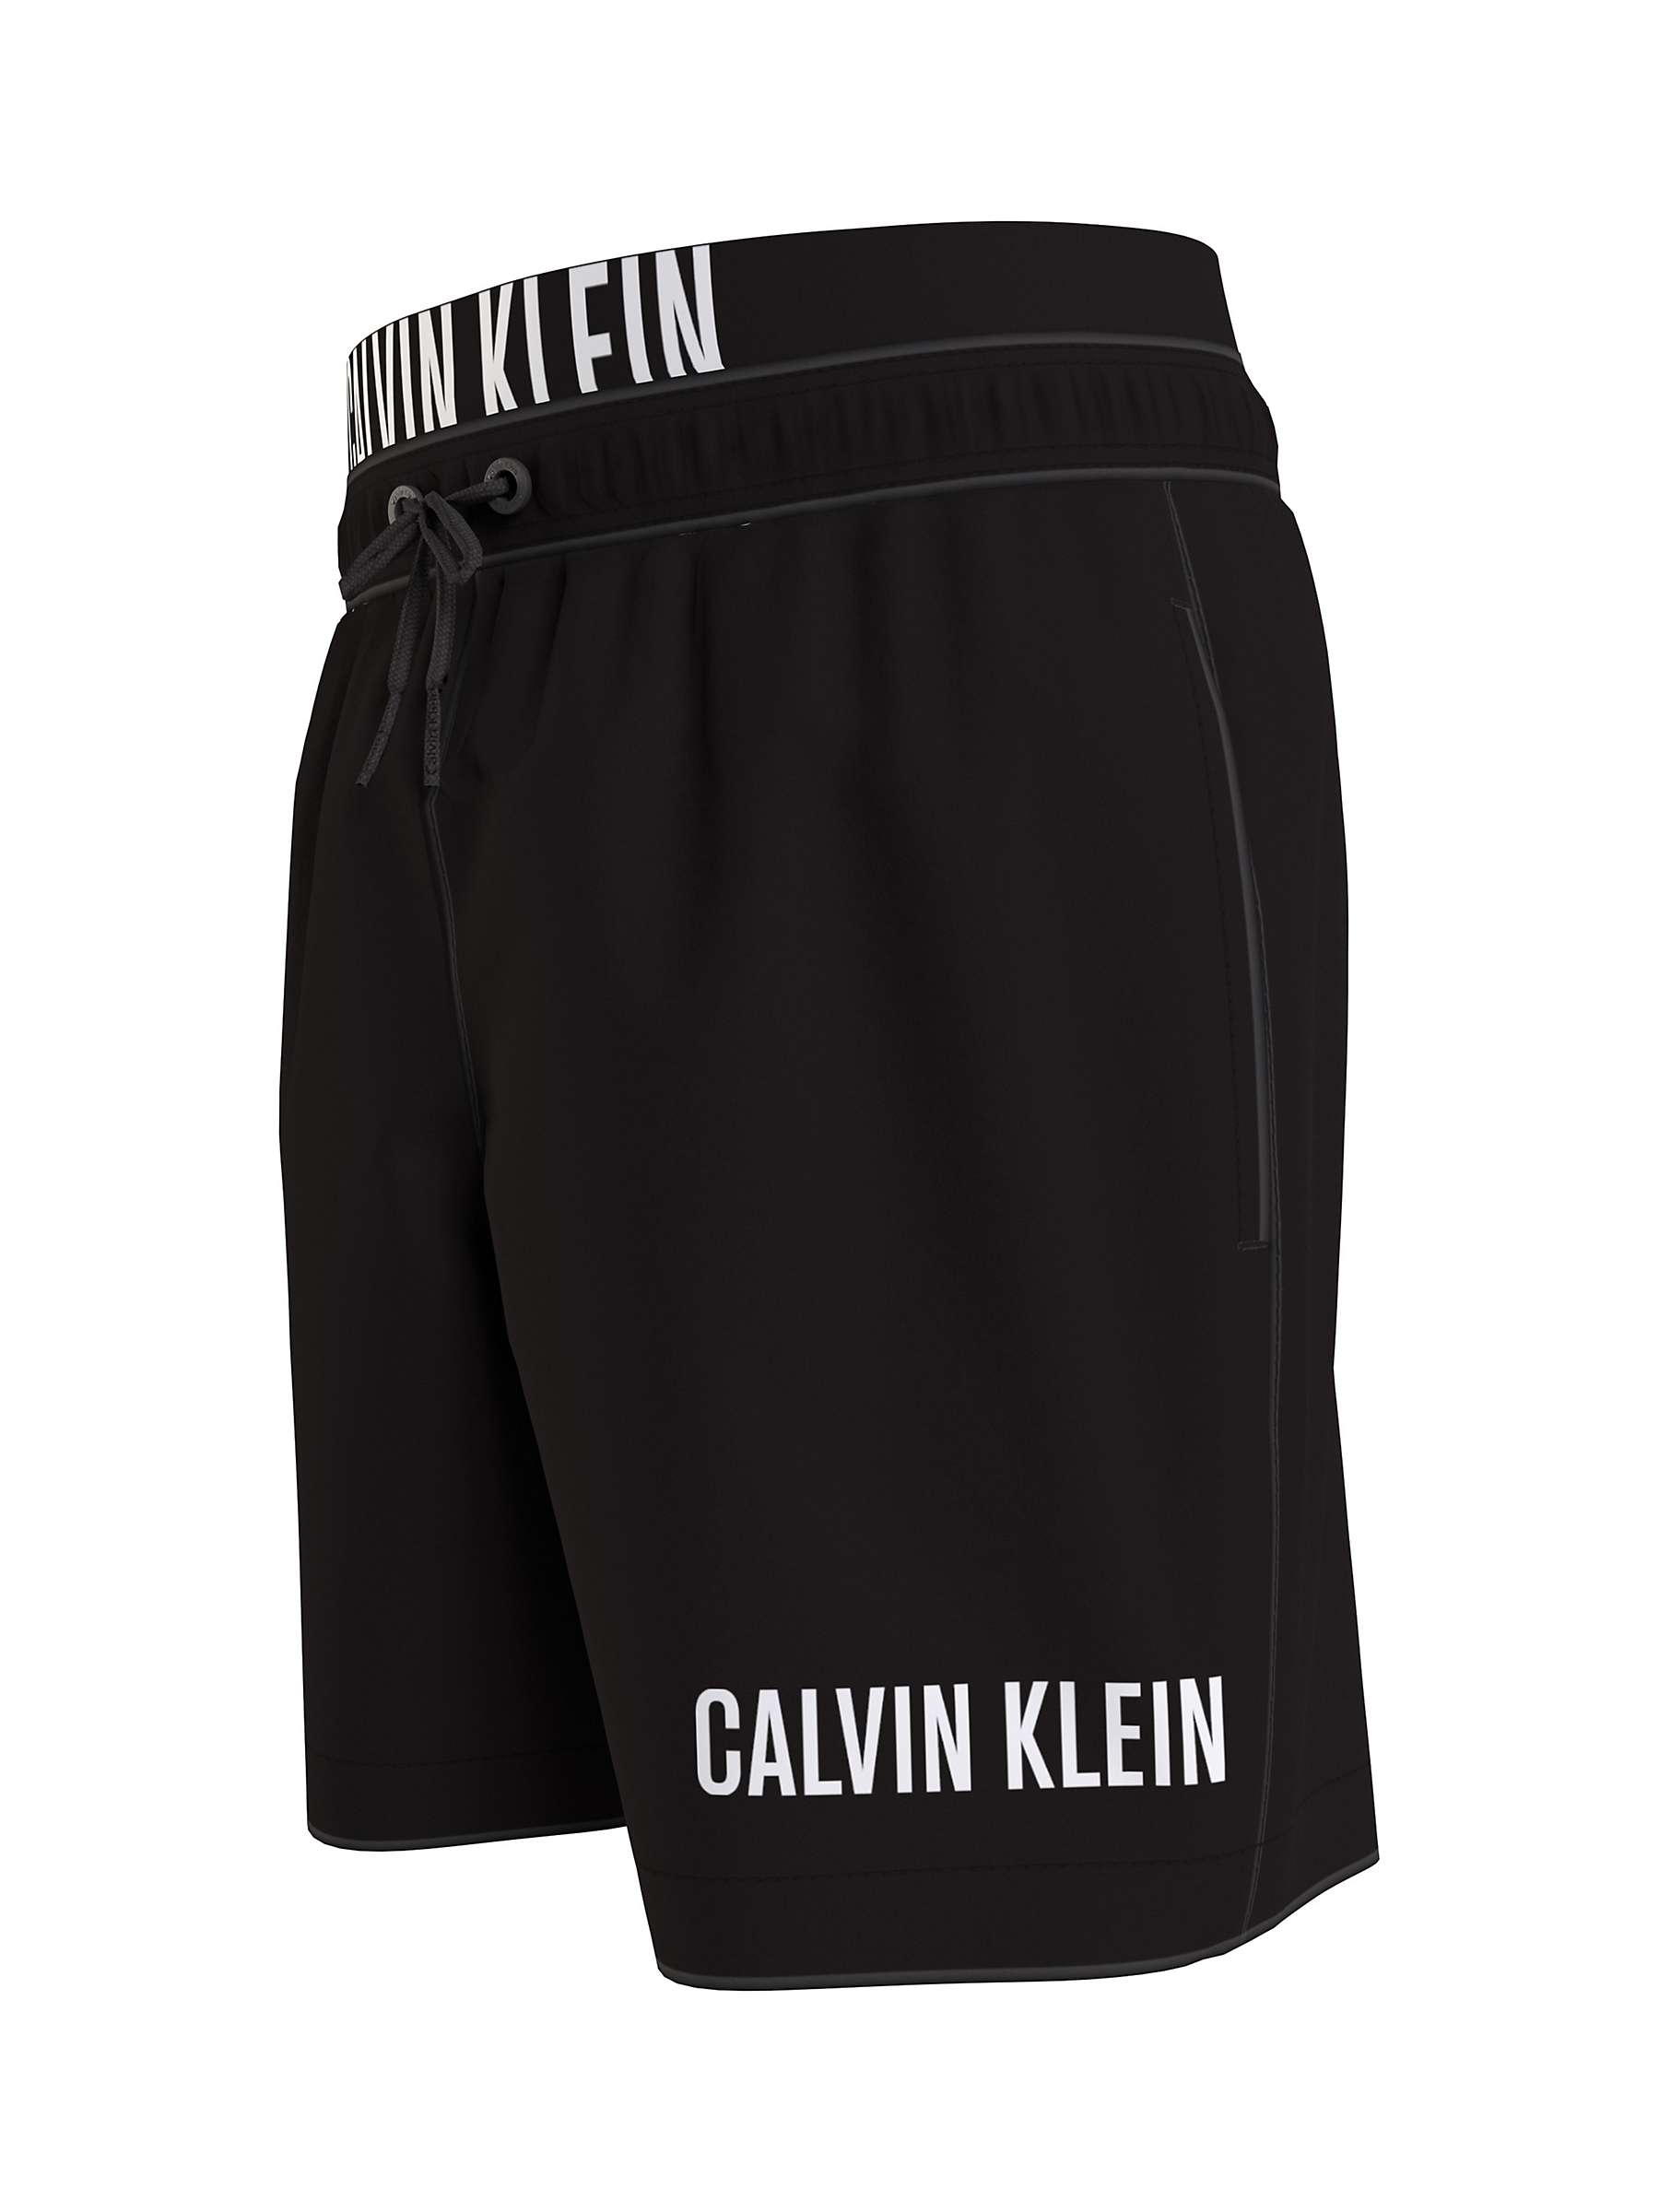 Buy Calvin Klein Double Waistband Swim Shorts, Black Online at johnlewis.com